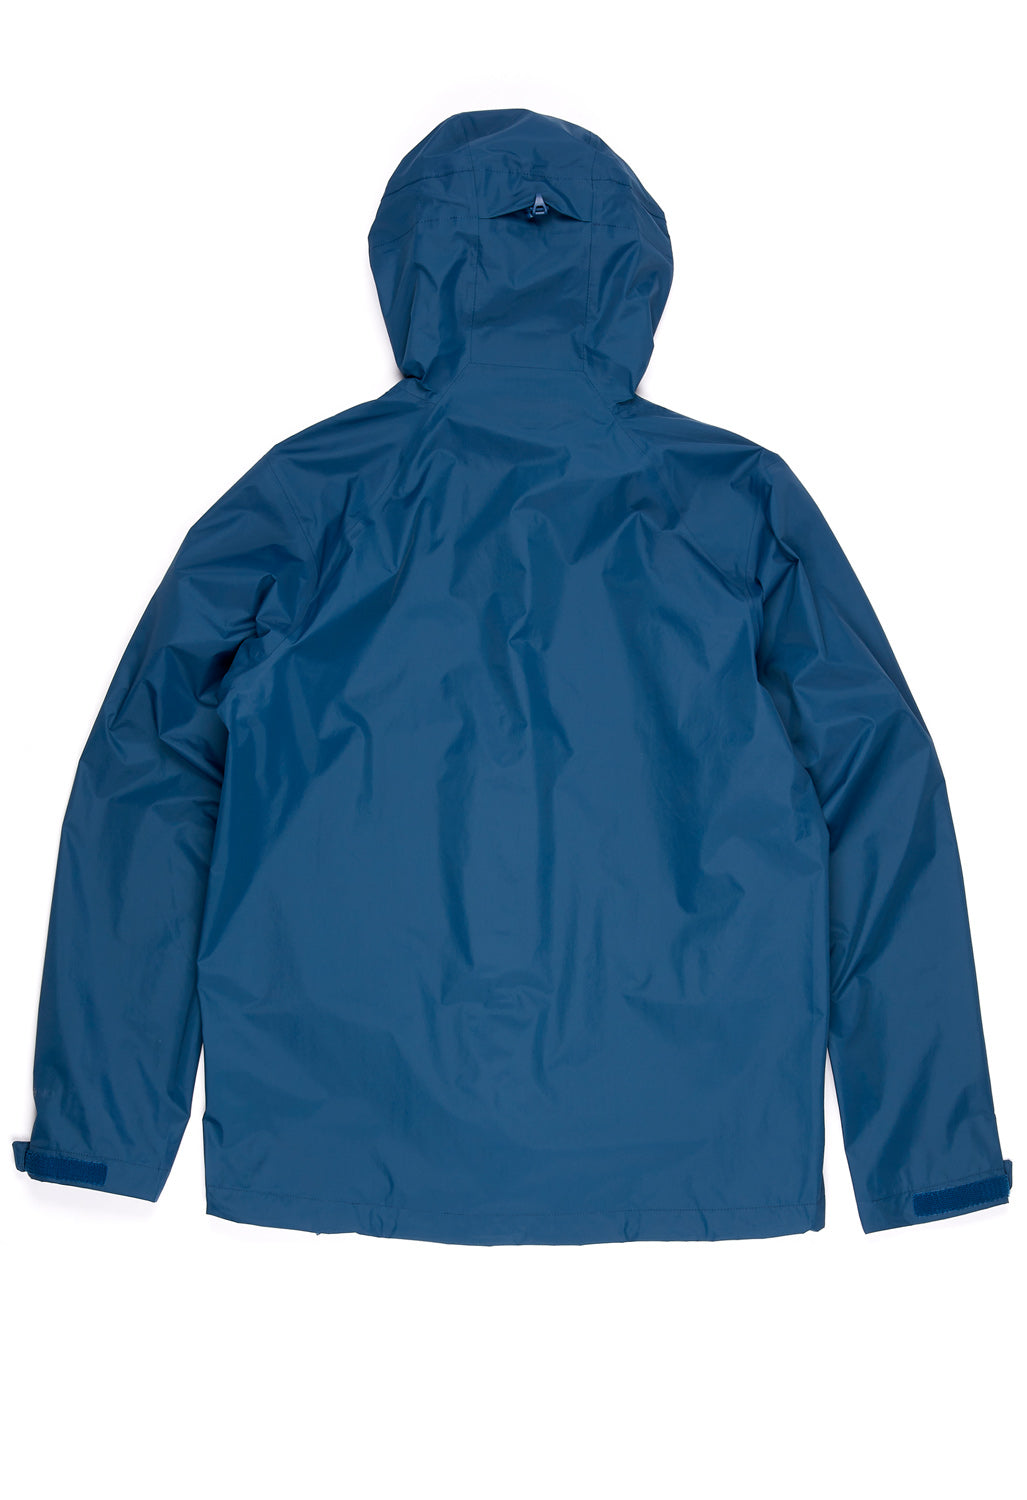 Patagonia Men's Torrentshell 3L Jacket - Lagoon Blue